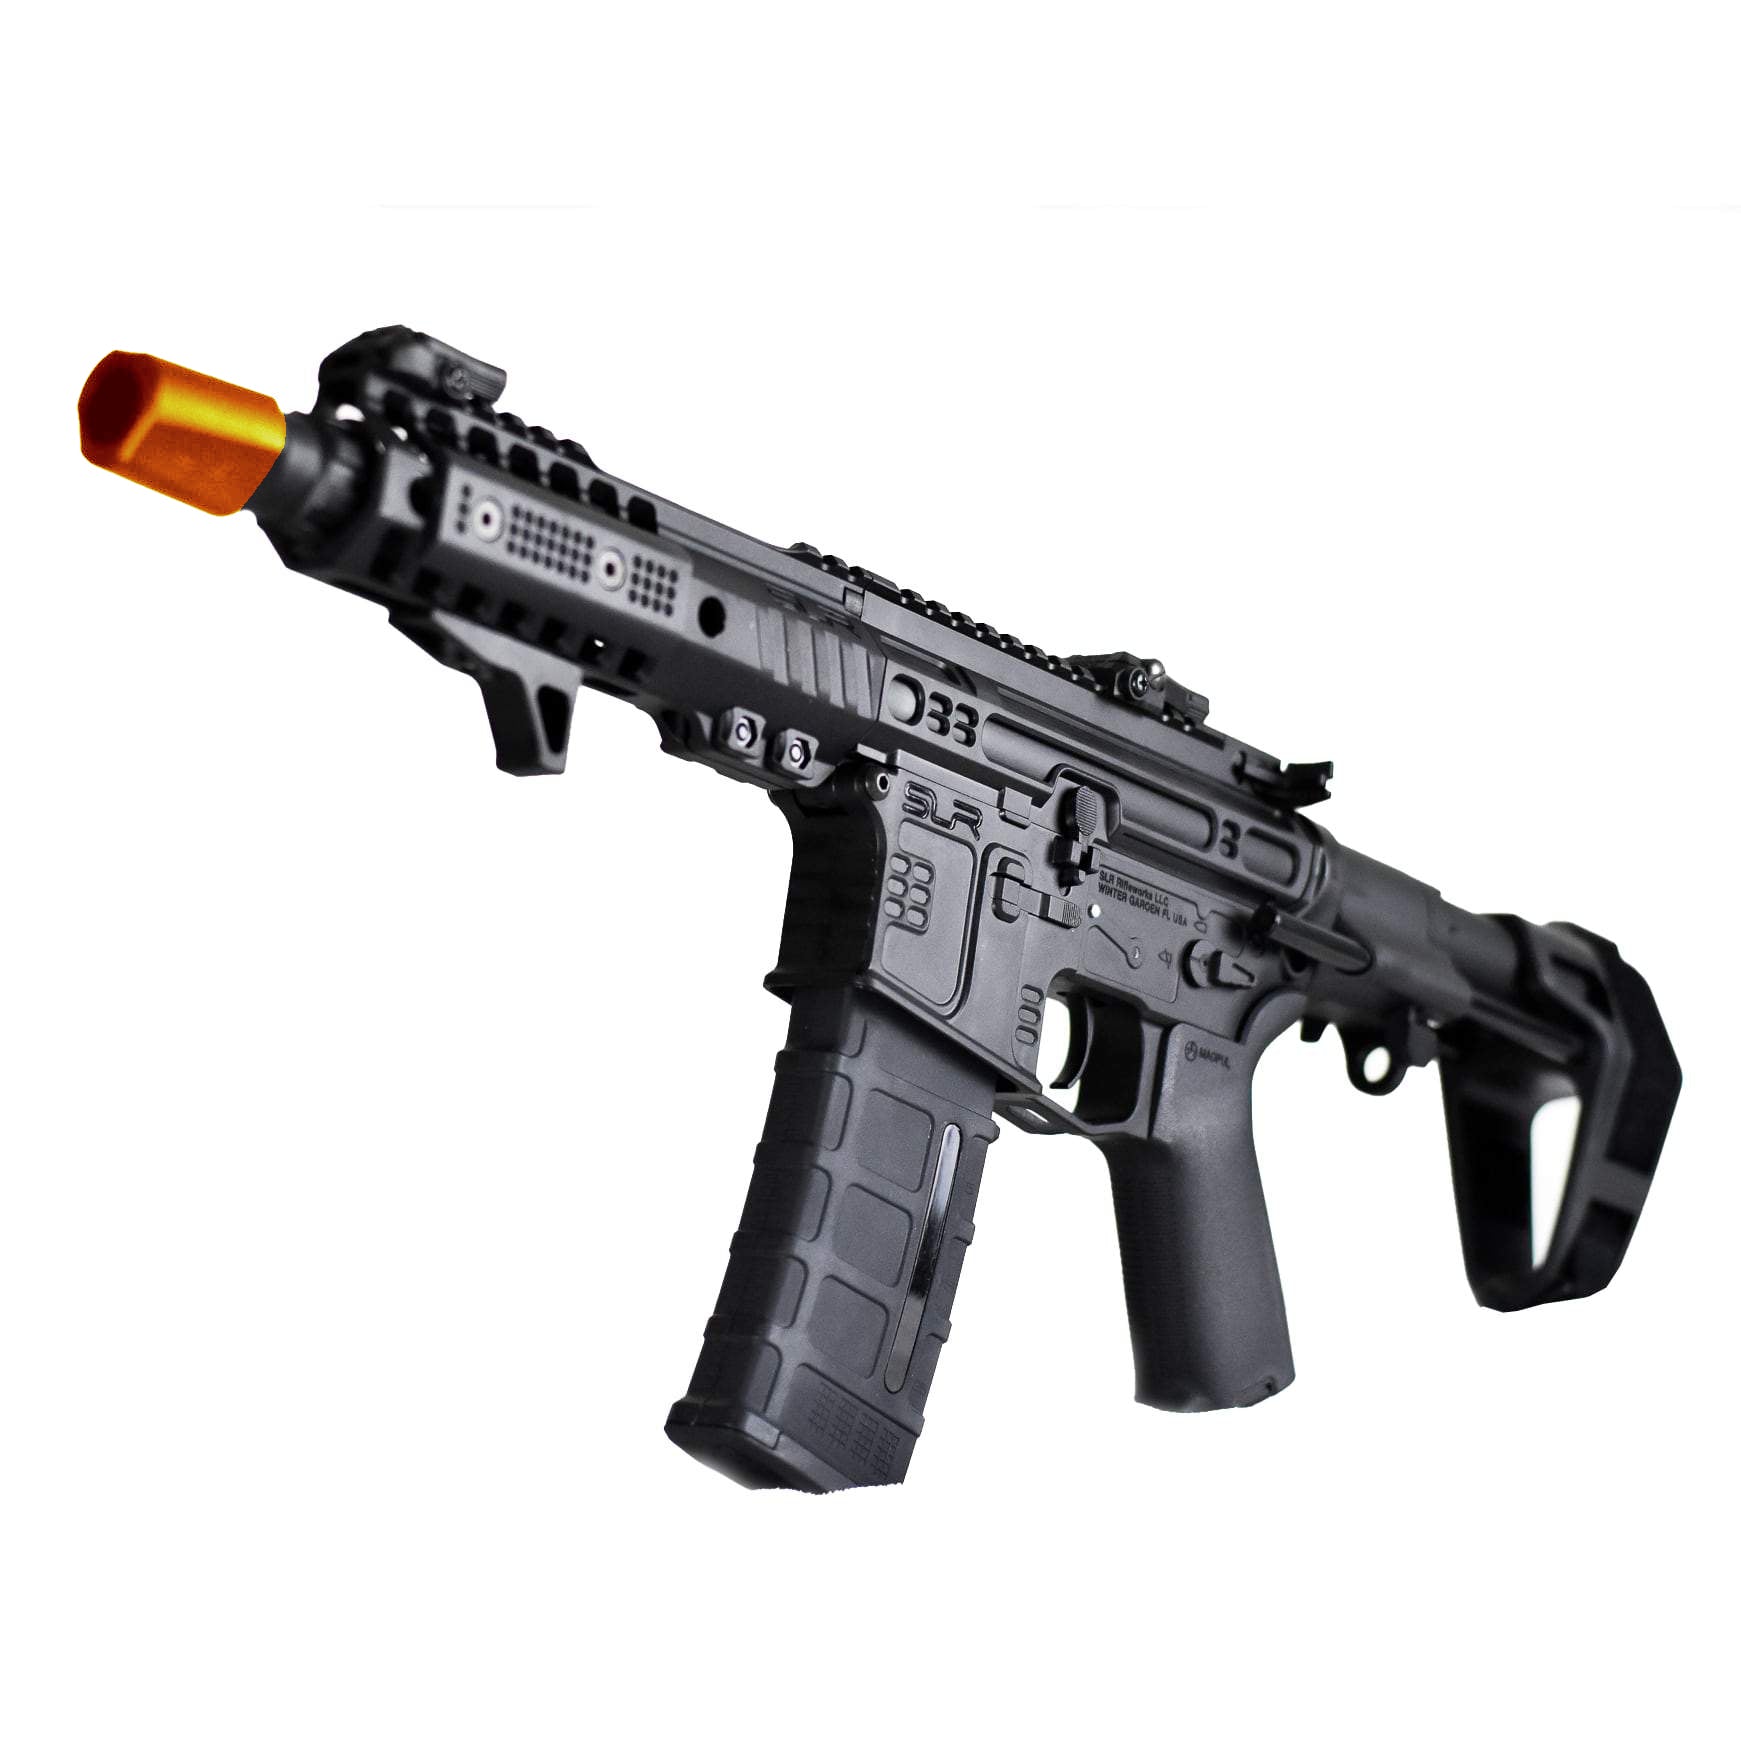 STD SLR Gel Blaster Assault Rifle - Tactical Gel Blasters